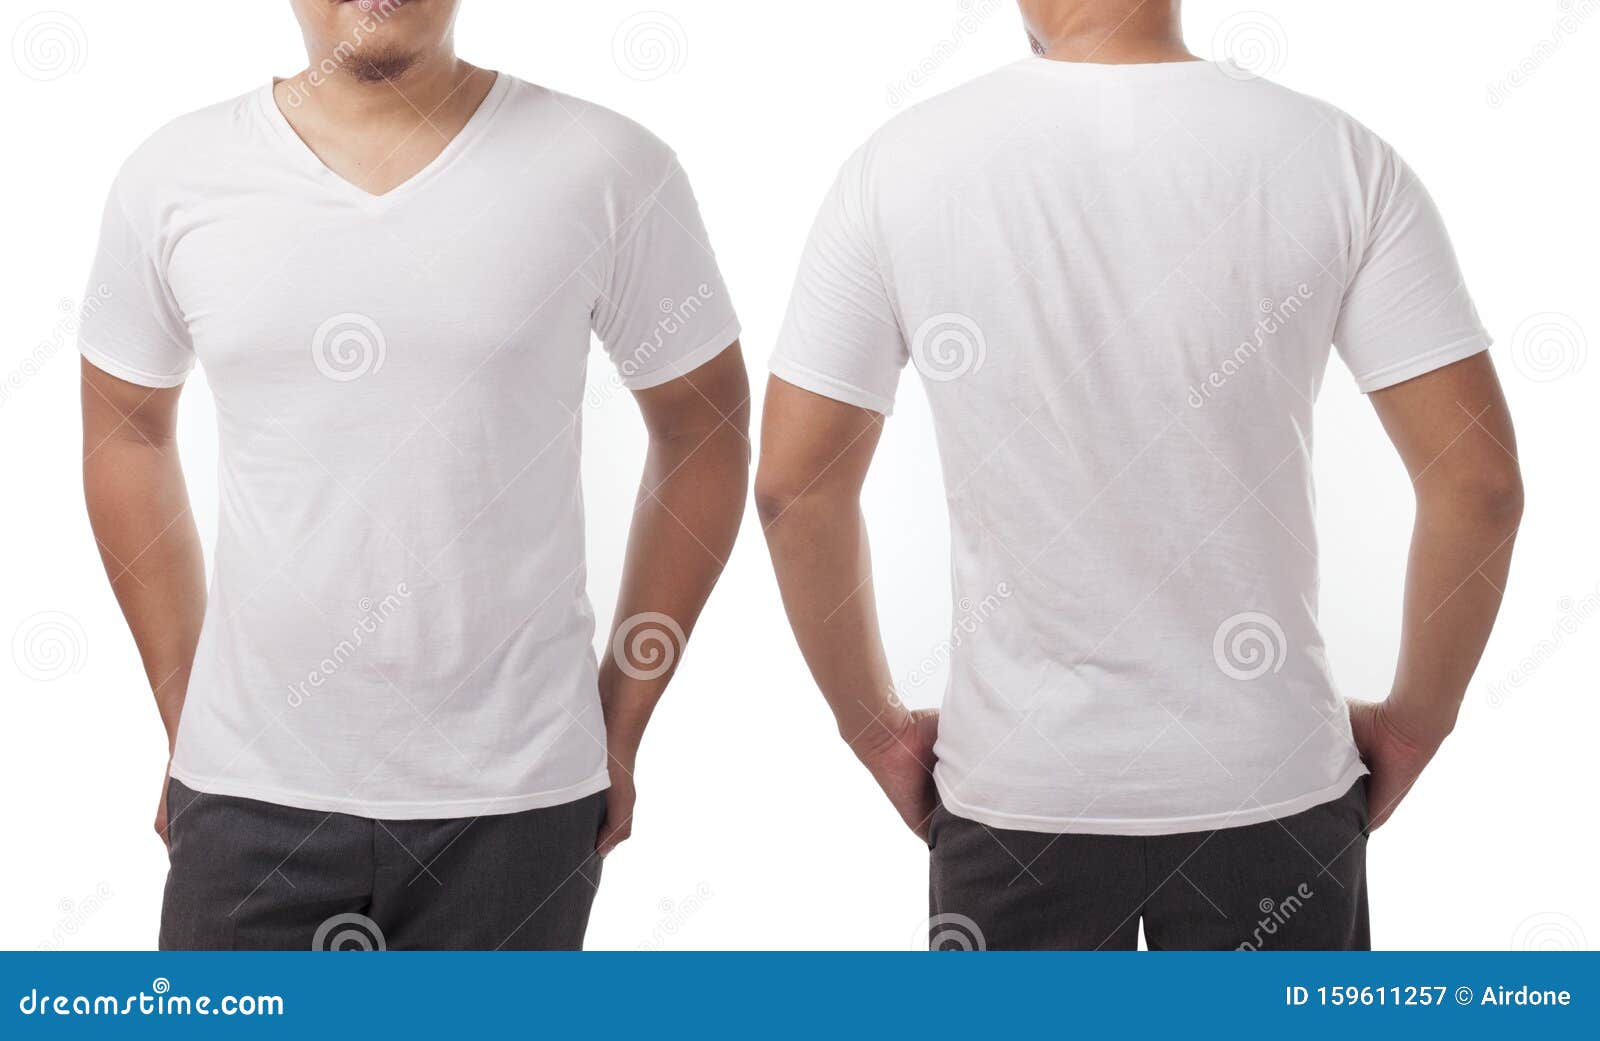 plain white t shirt for men back and front